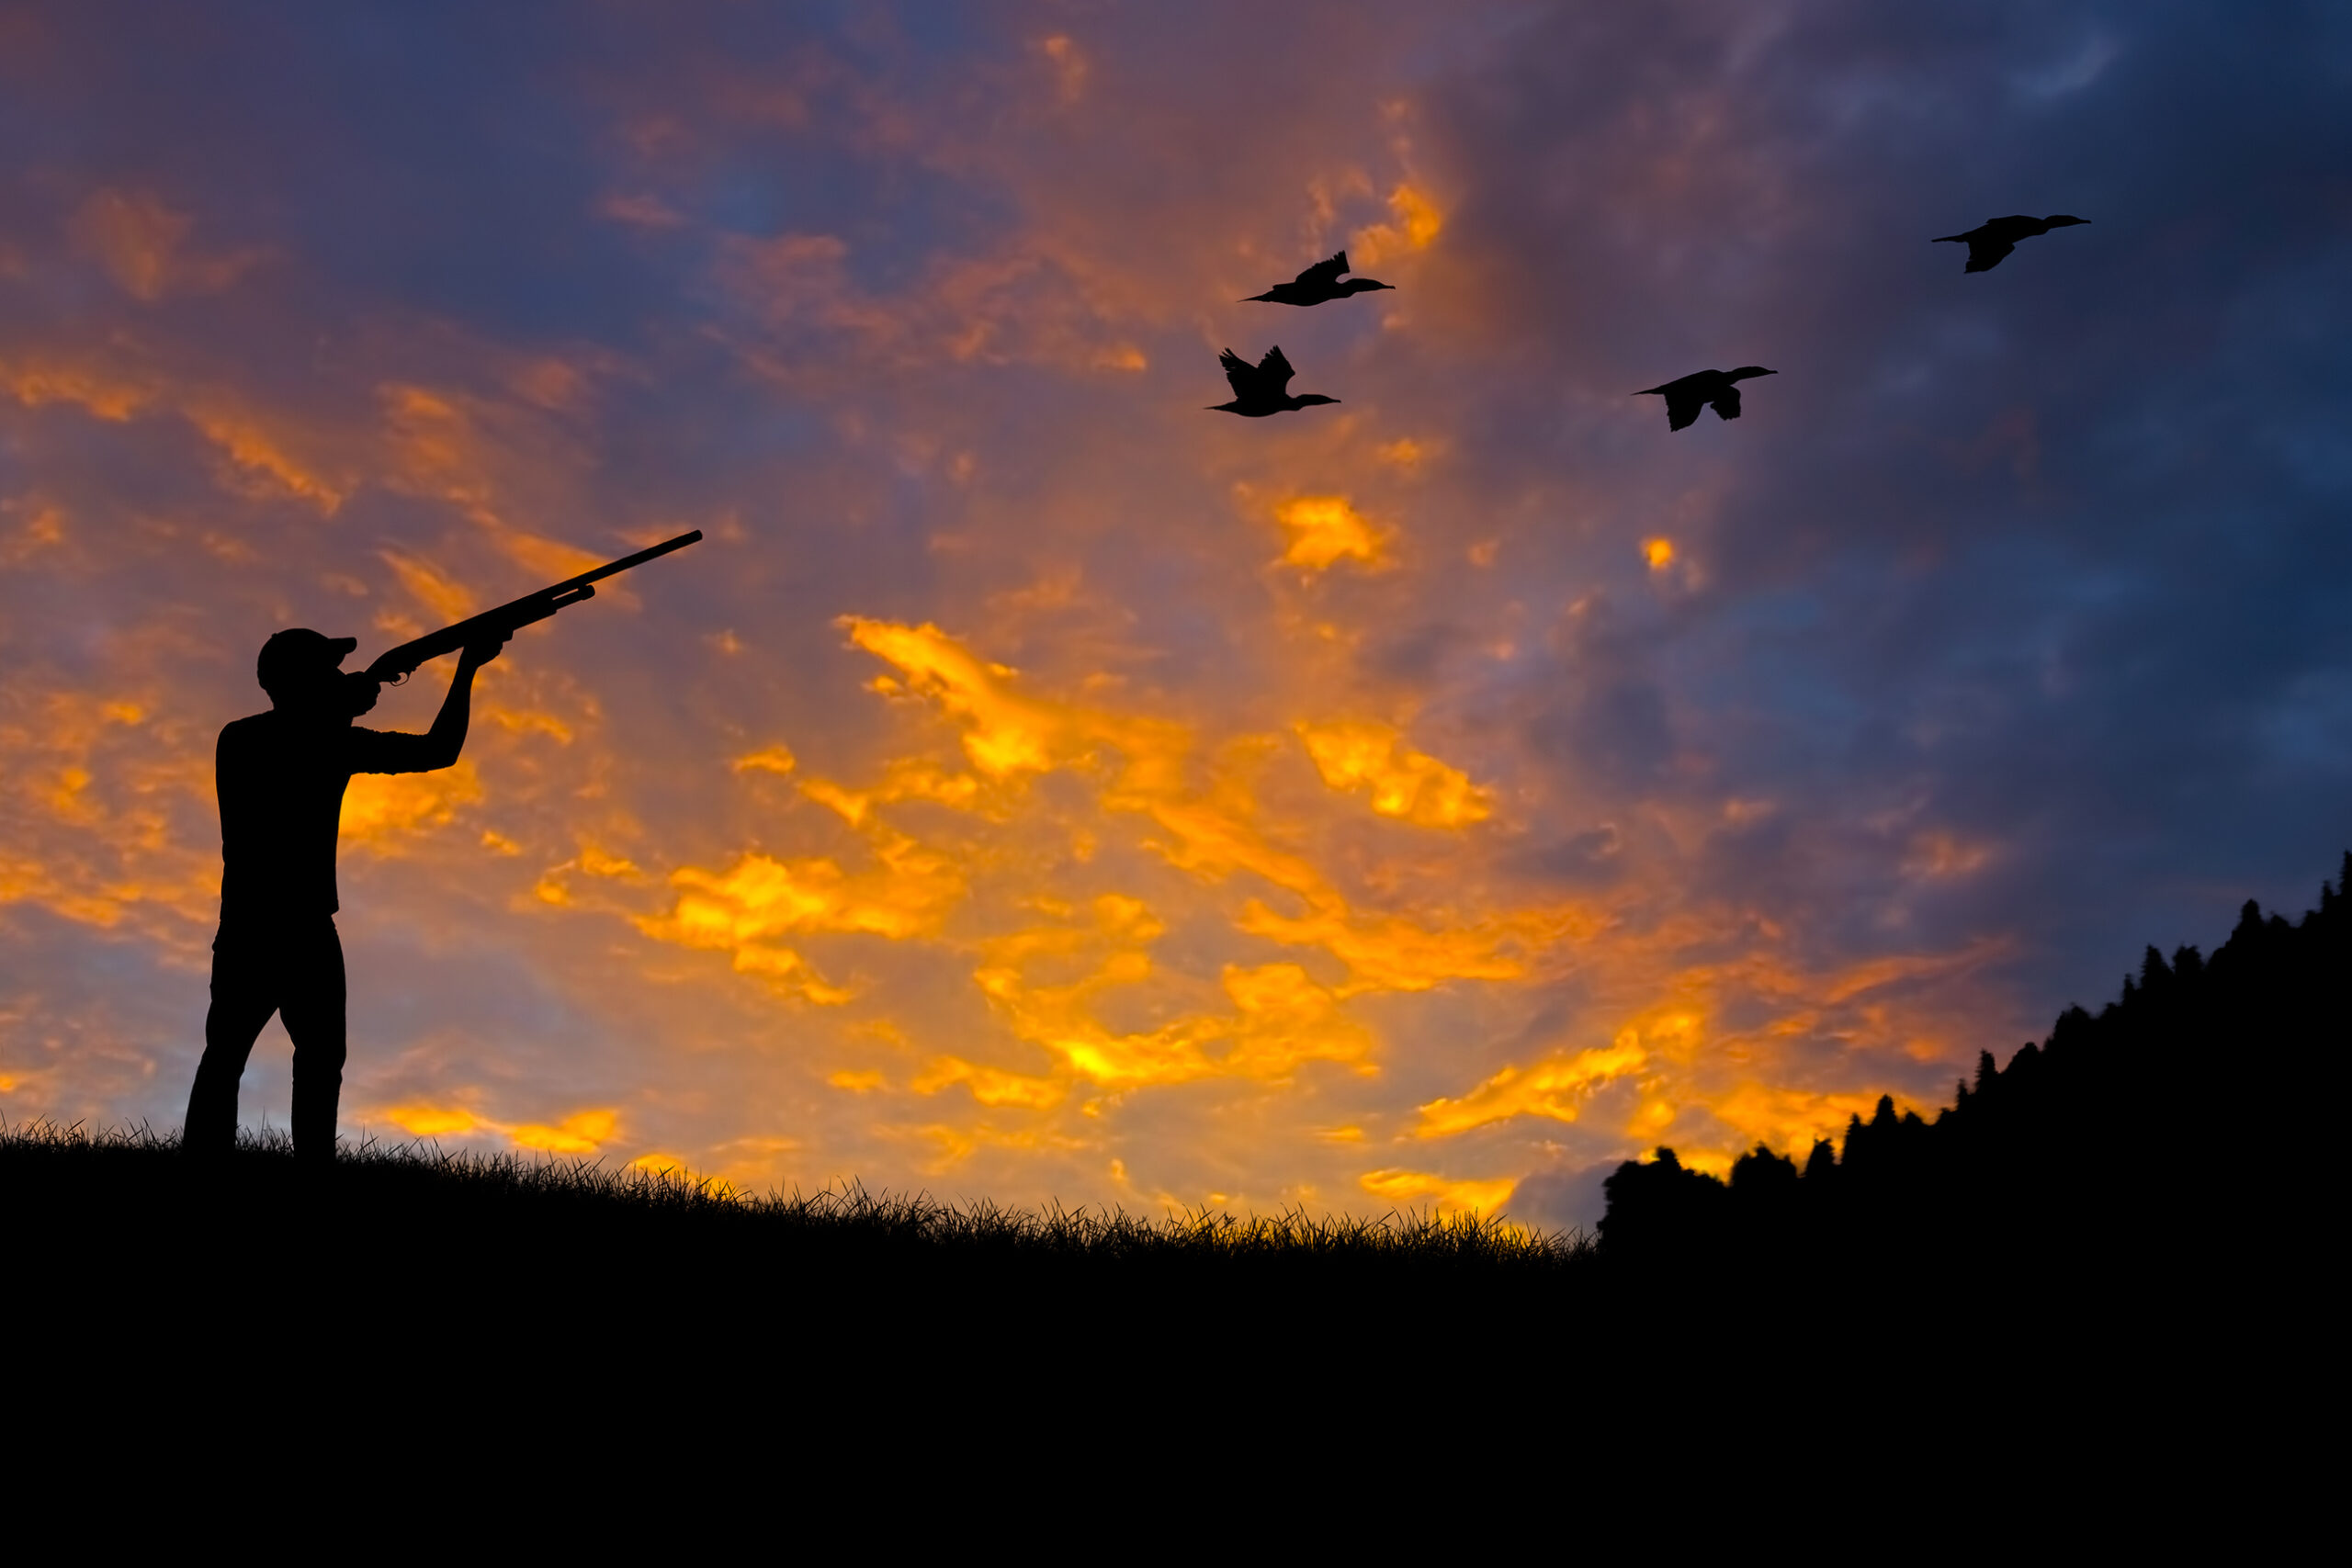 Pheasant Hunting Season in South Dakota is in Full Swing